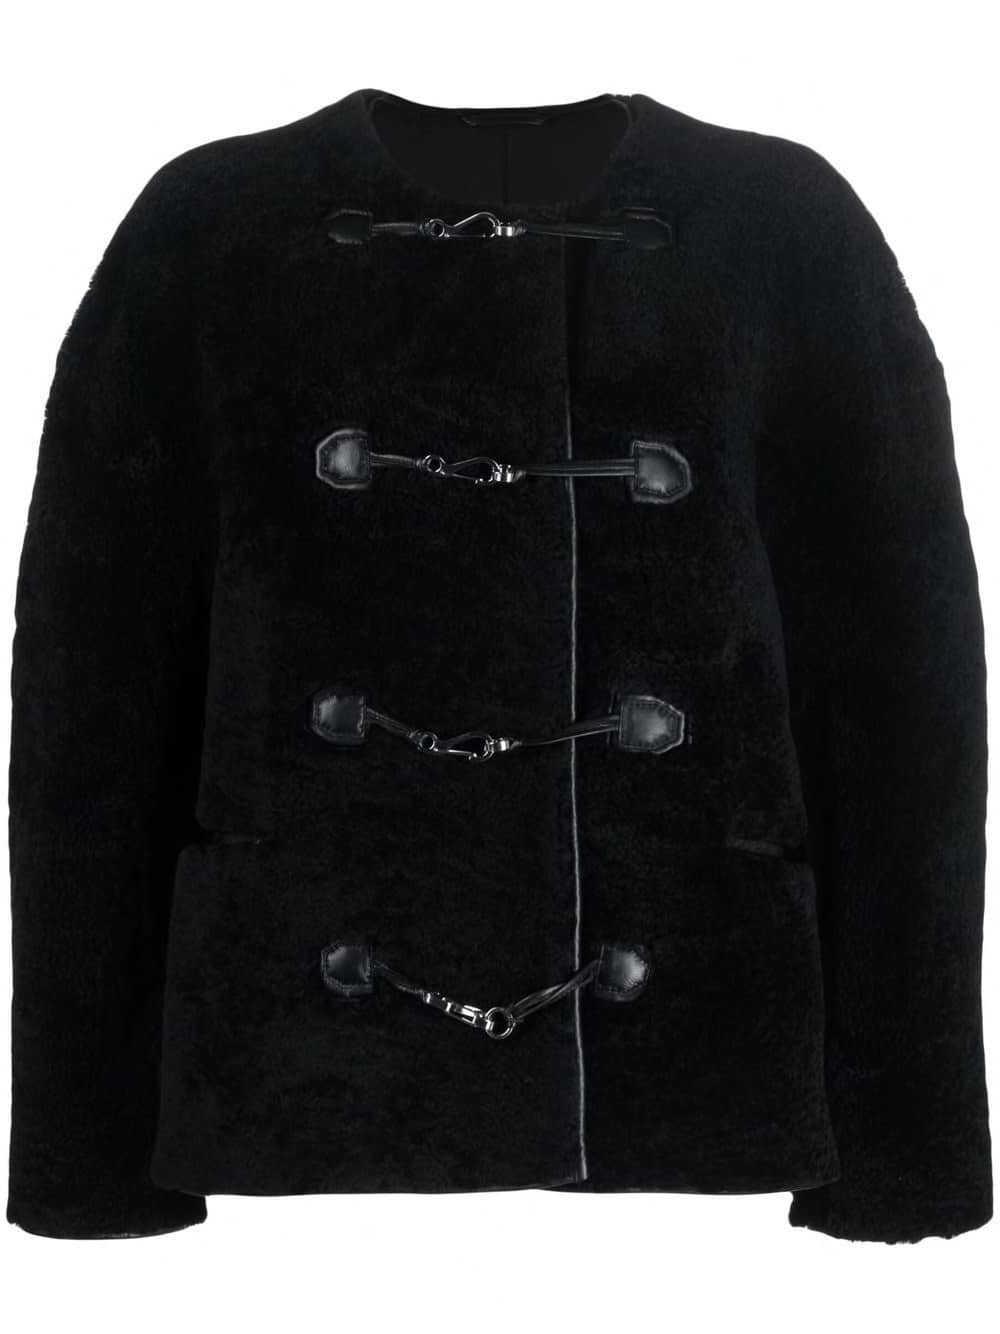 Toteme Teddy shearling jacket (Size: M/L)